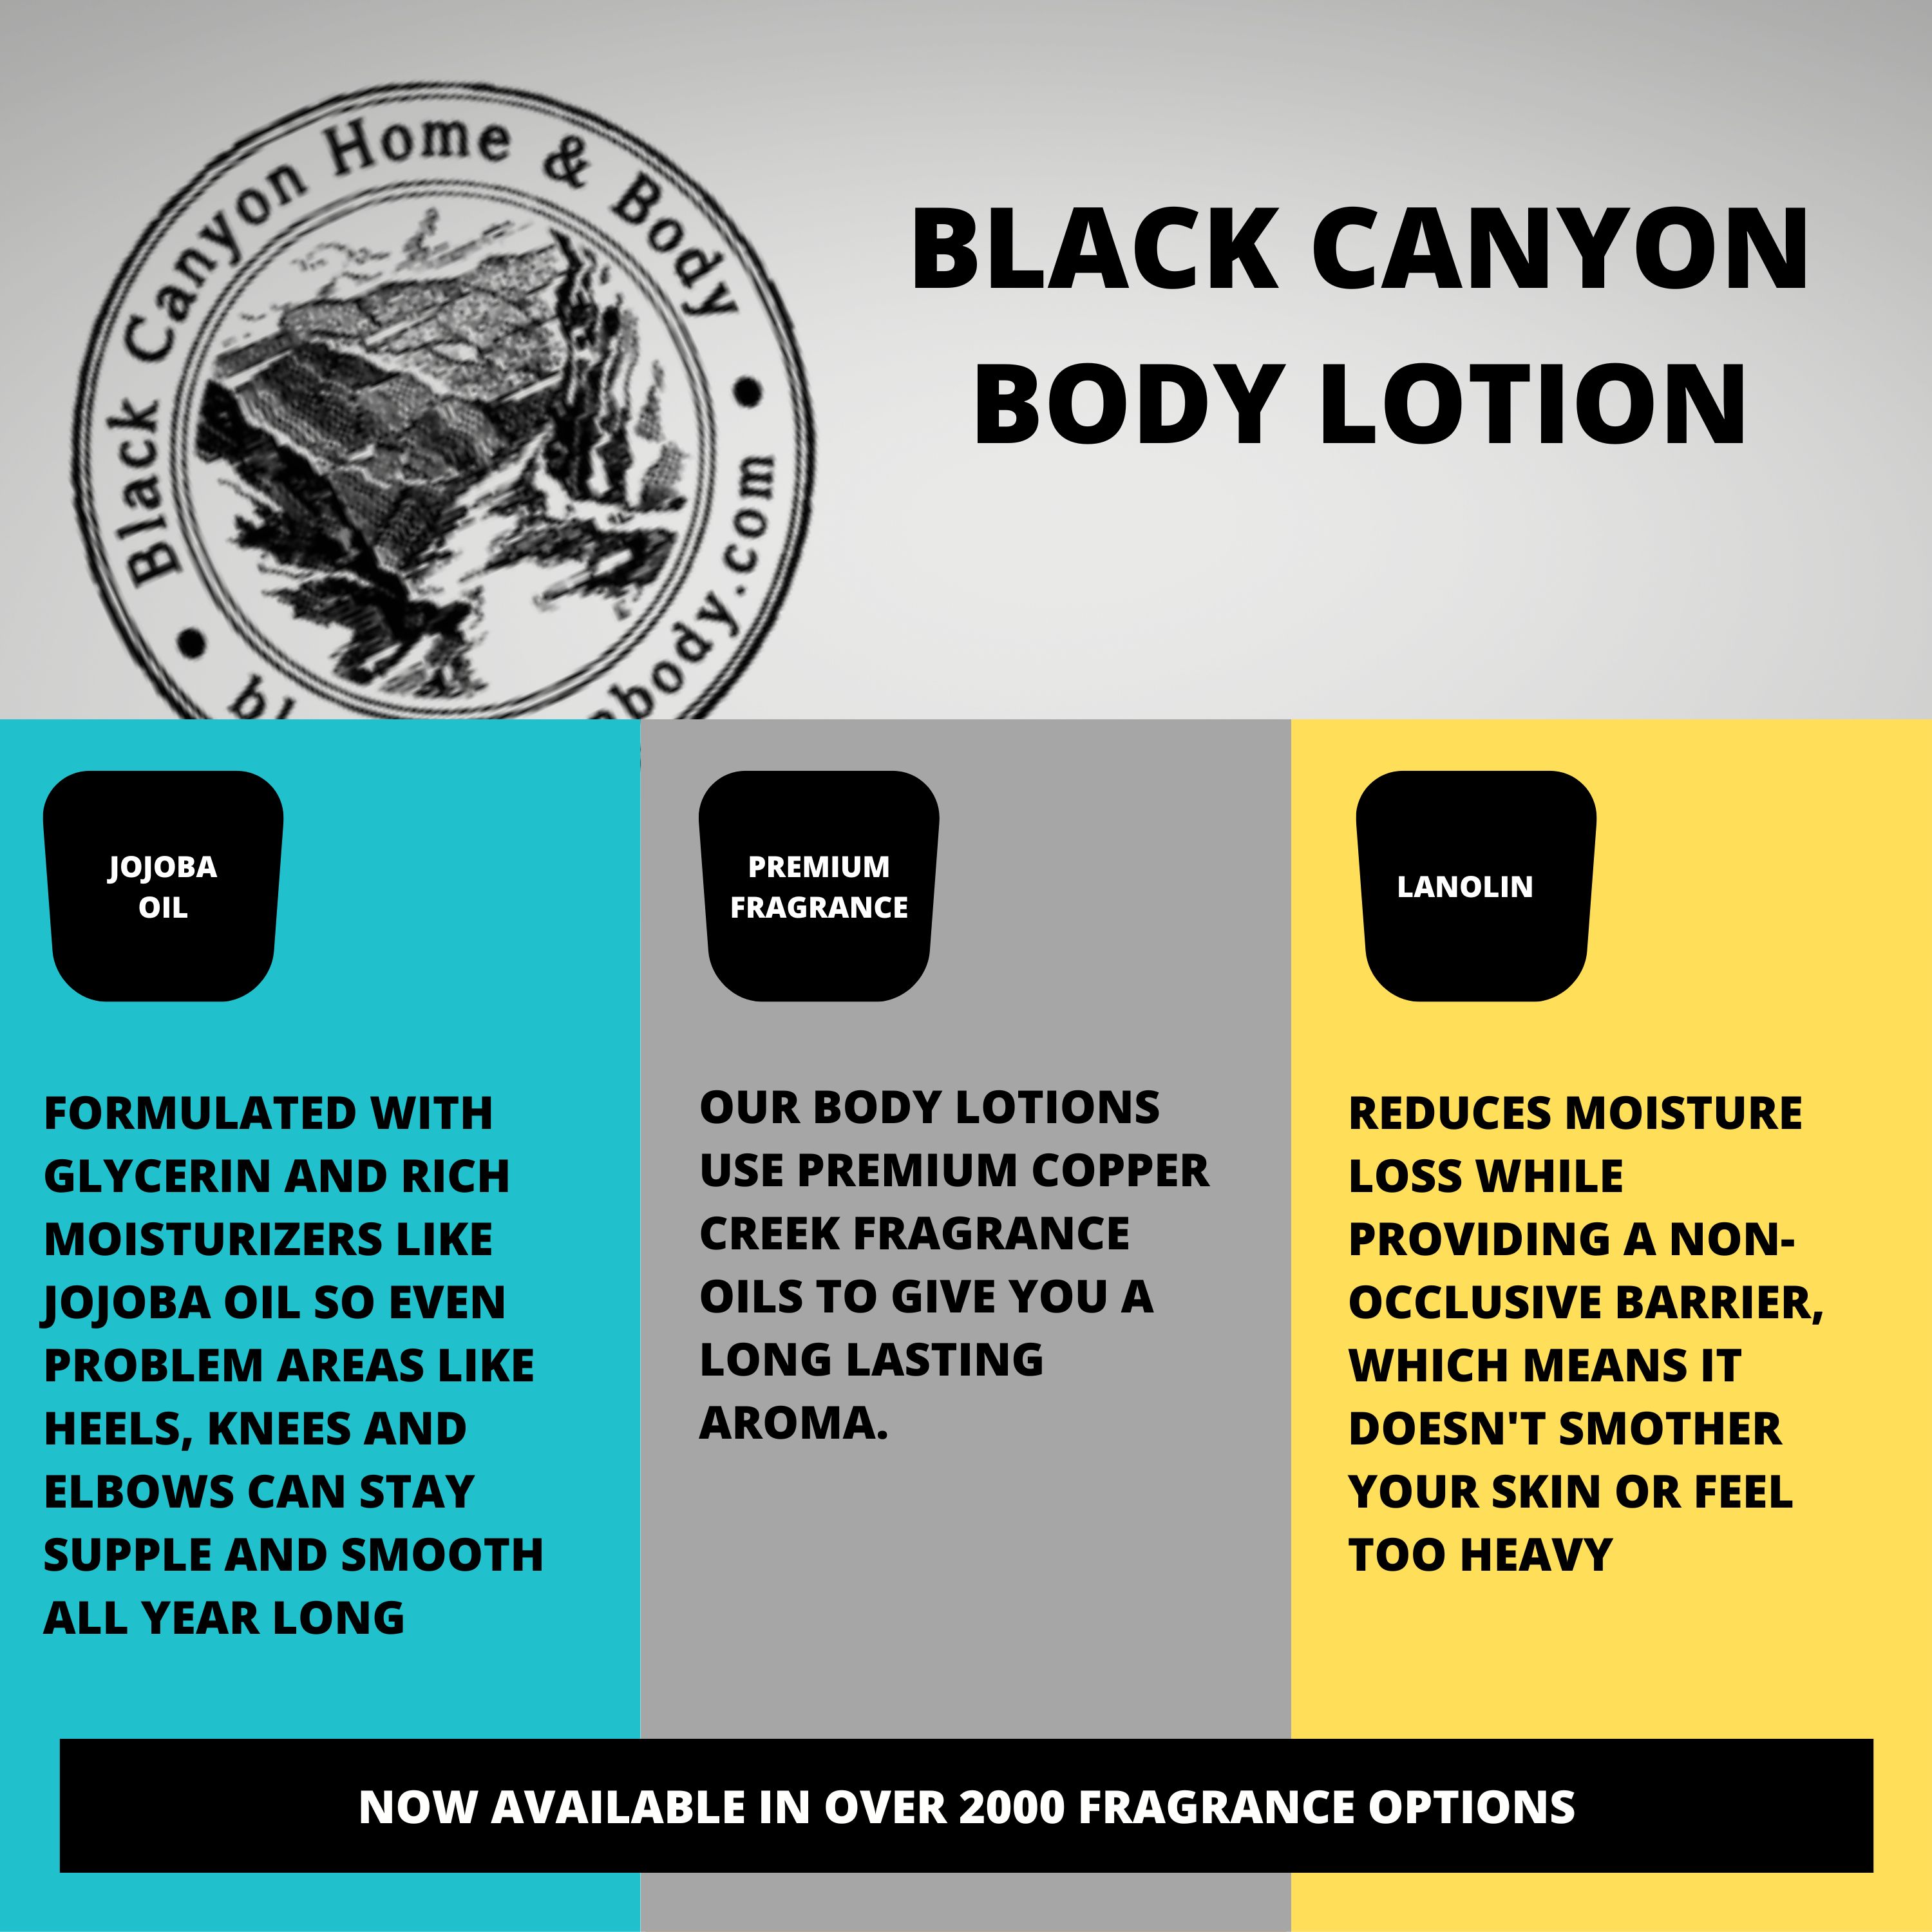 Black Canyon Bergamot Freesia & Dandelion Scented Luxury Body Lotion with Lanolin and Jojoba Oil